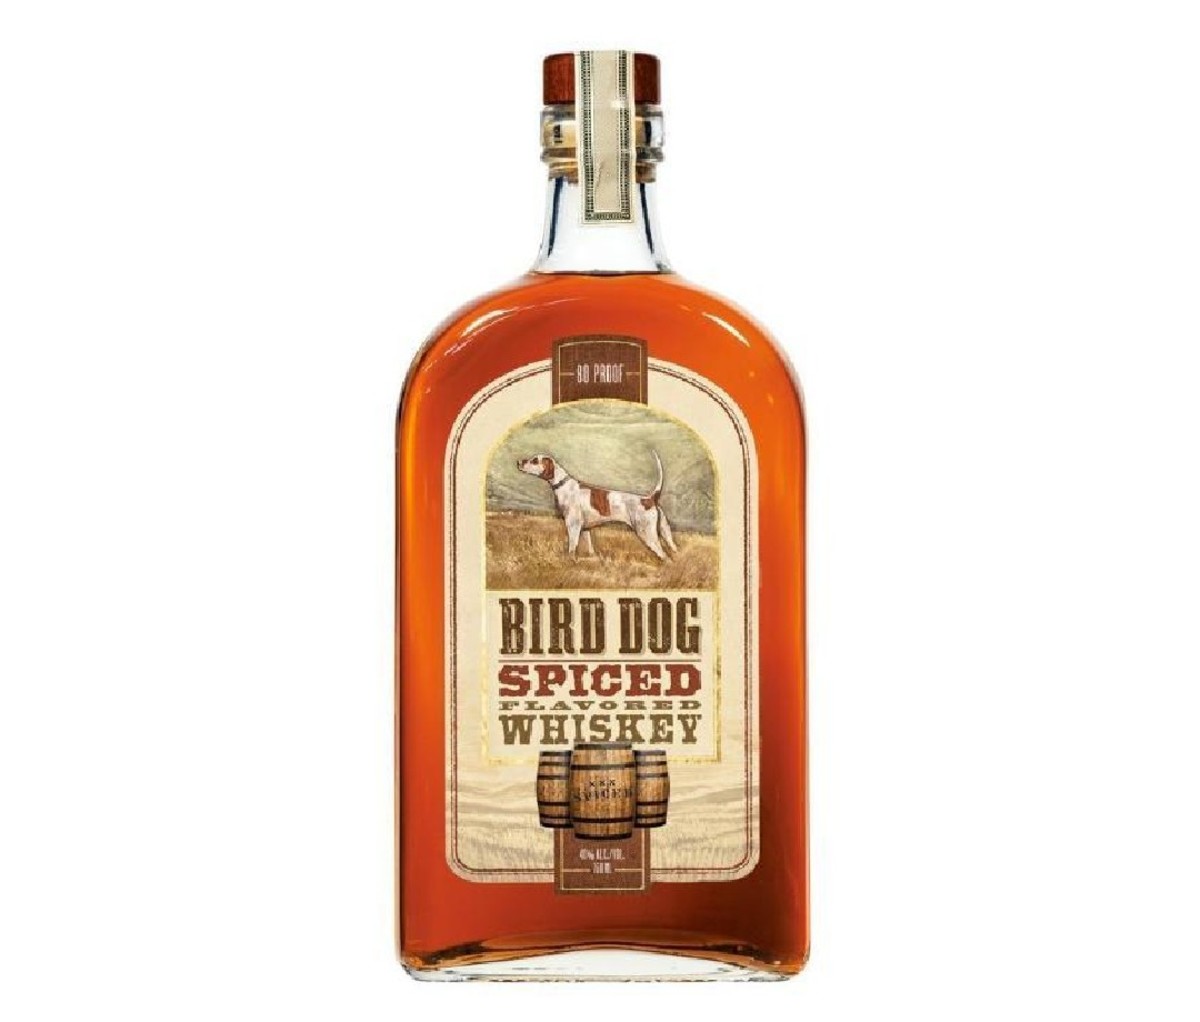 A bottle of Bird Dog Spiced Whiskey.